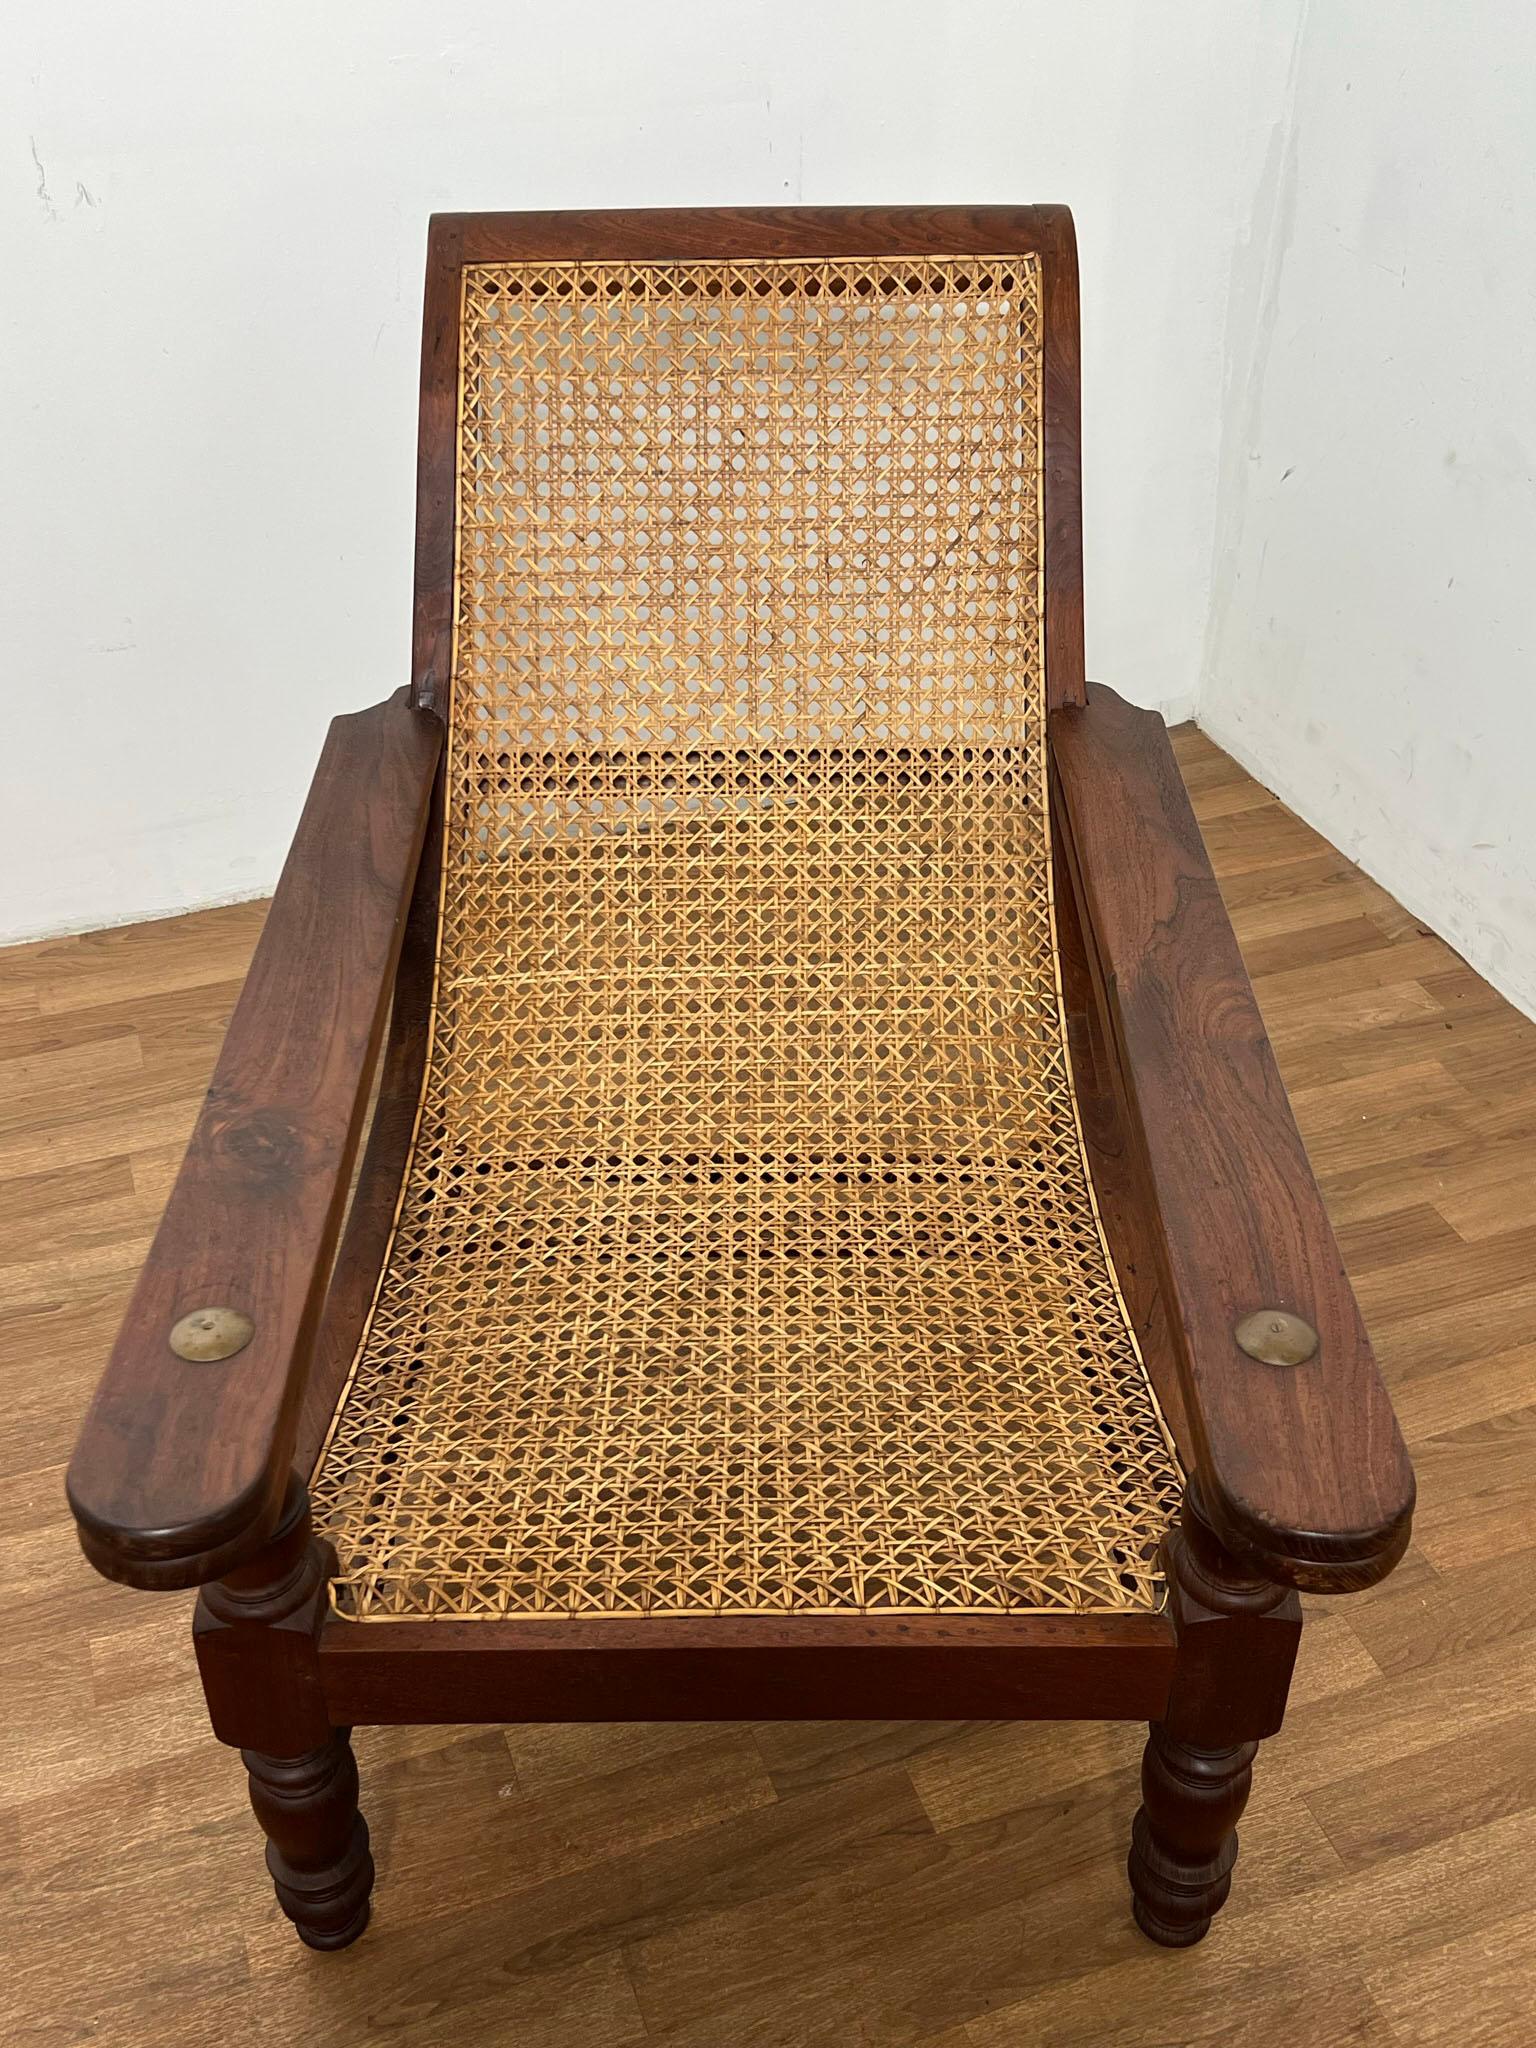 Antique Paddle Arm British Colonial Plantation Lounge Chair For Sale 1